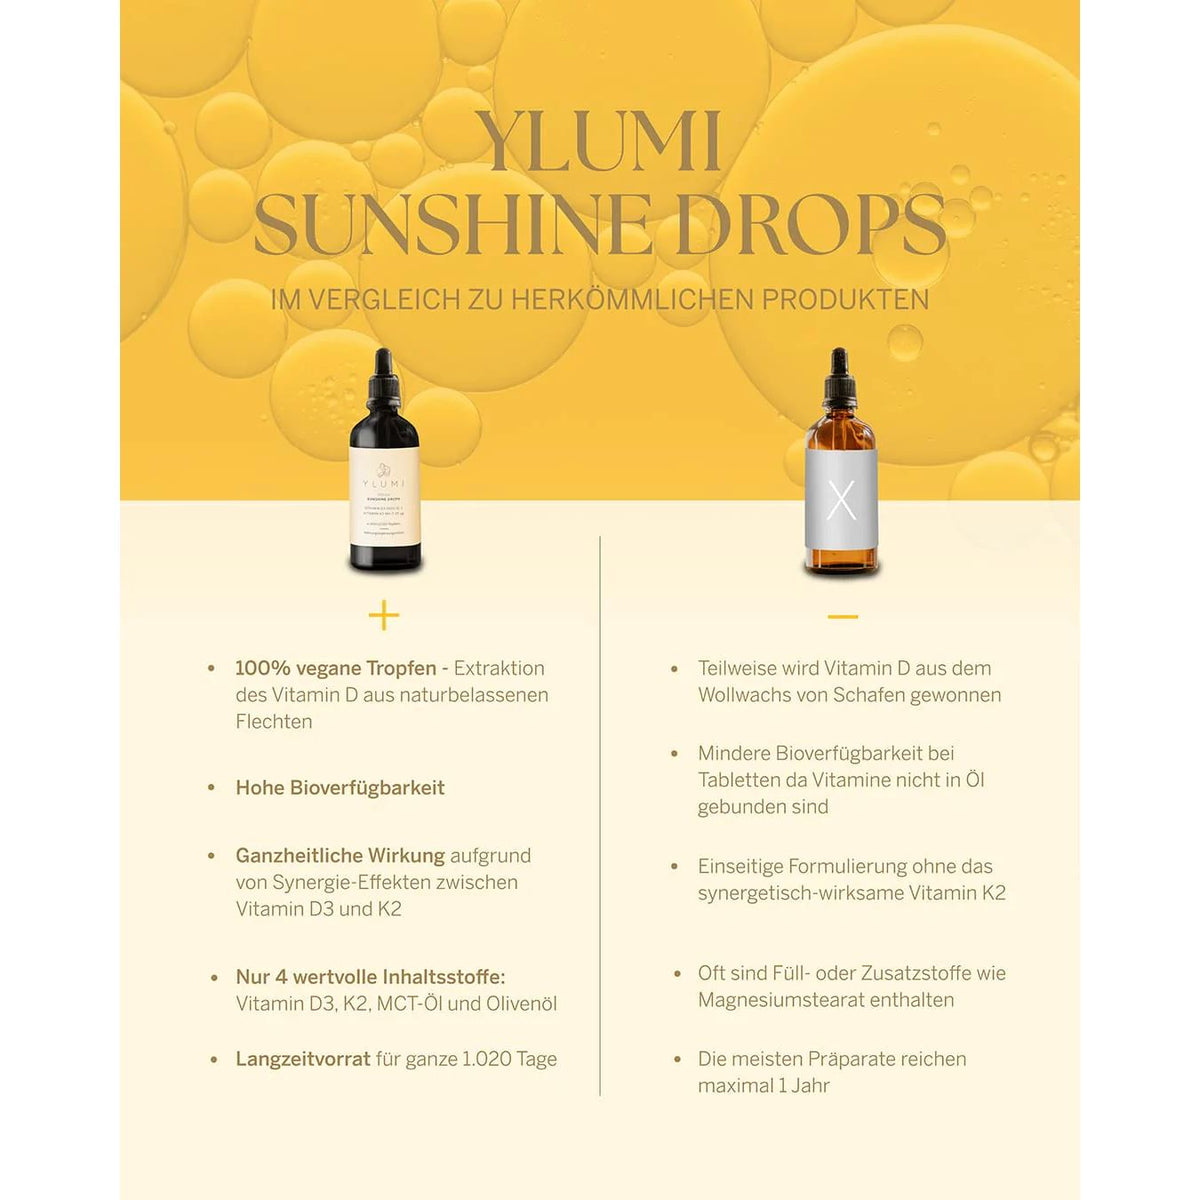 Sunshine Drops Ylumi - Genuine Selection